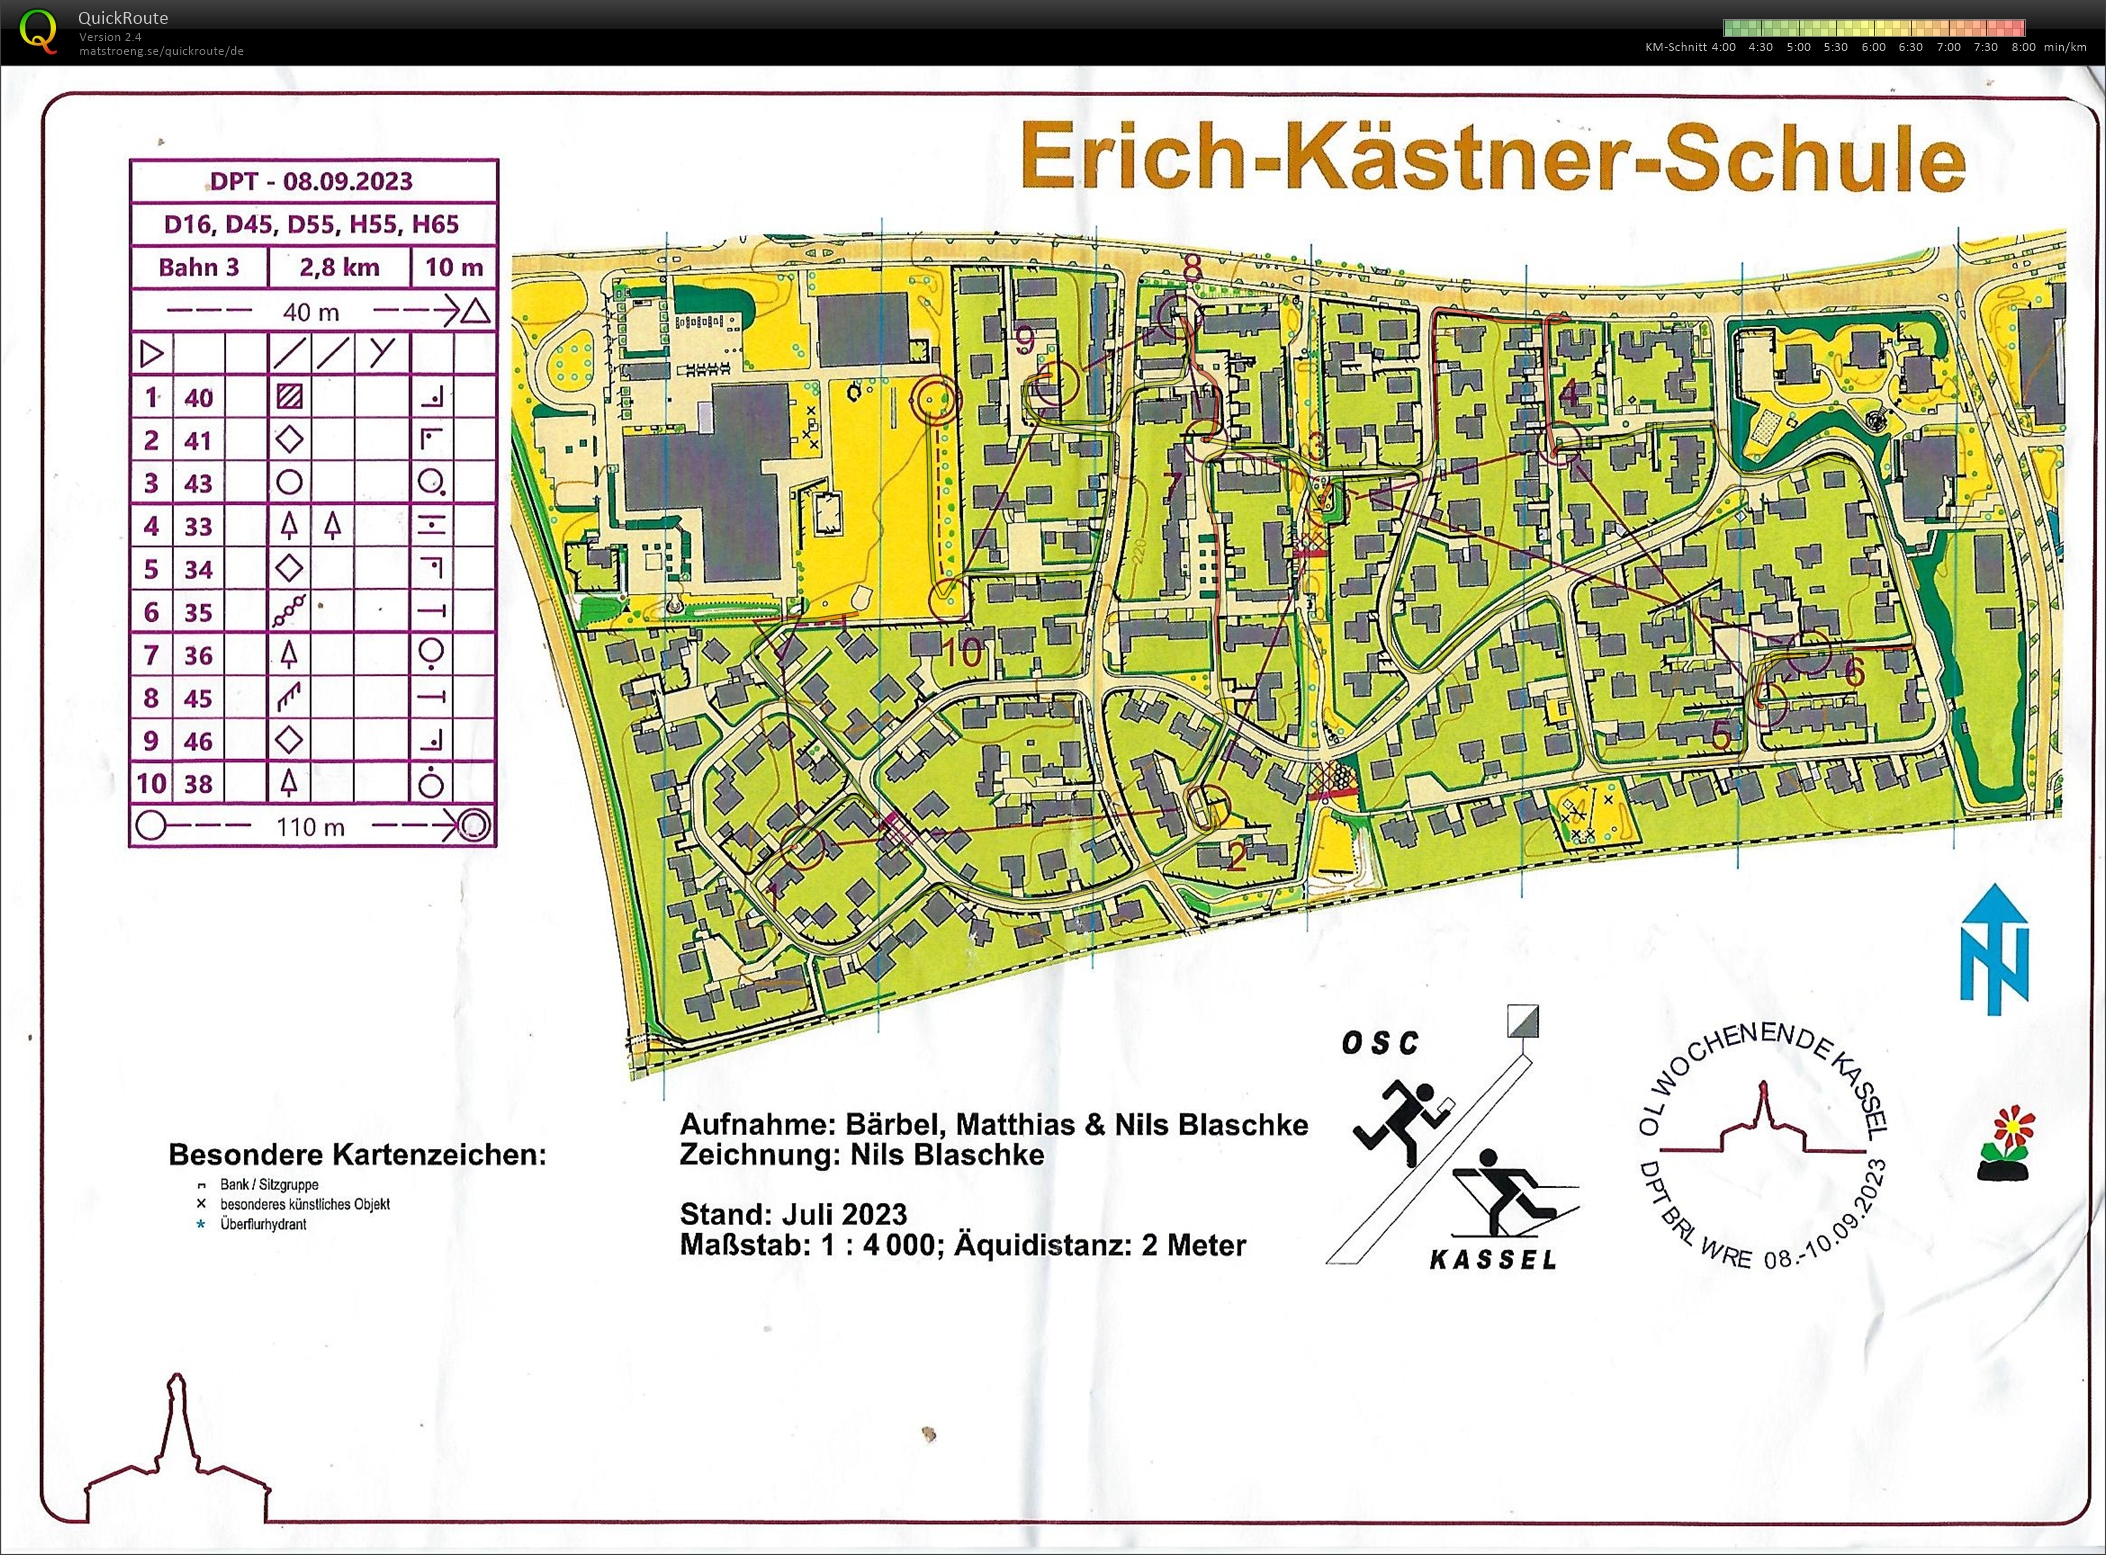 DPT Sprint-OL Kassel (08/09/2023)